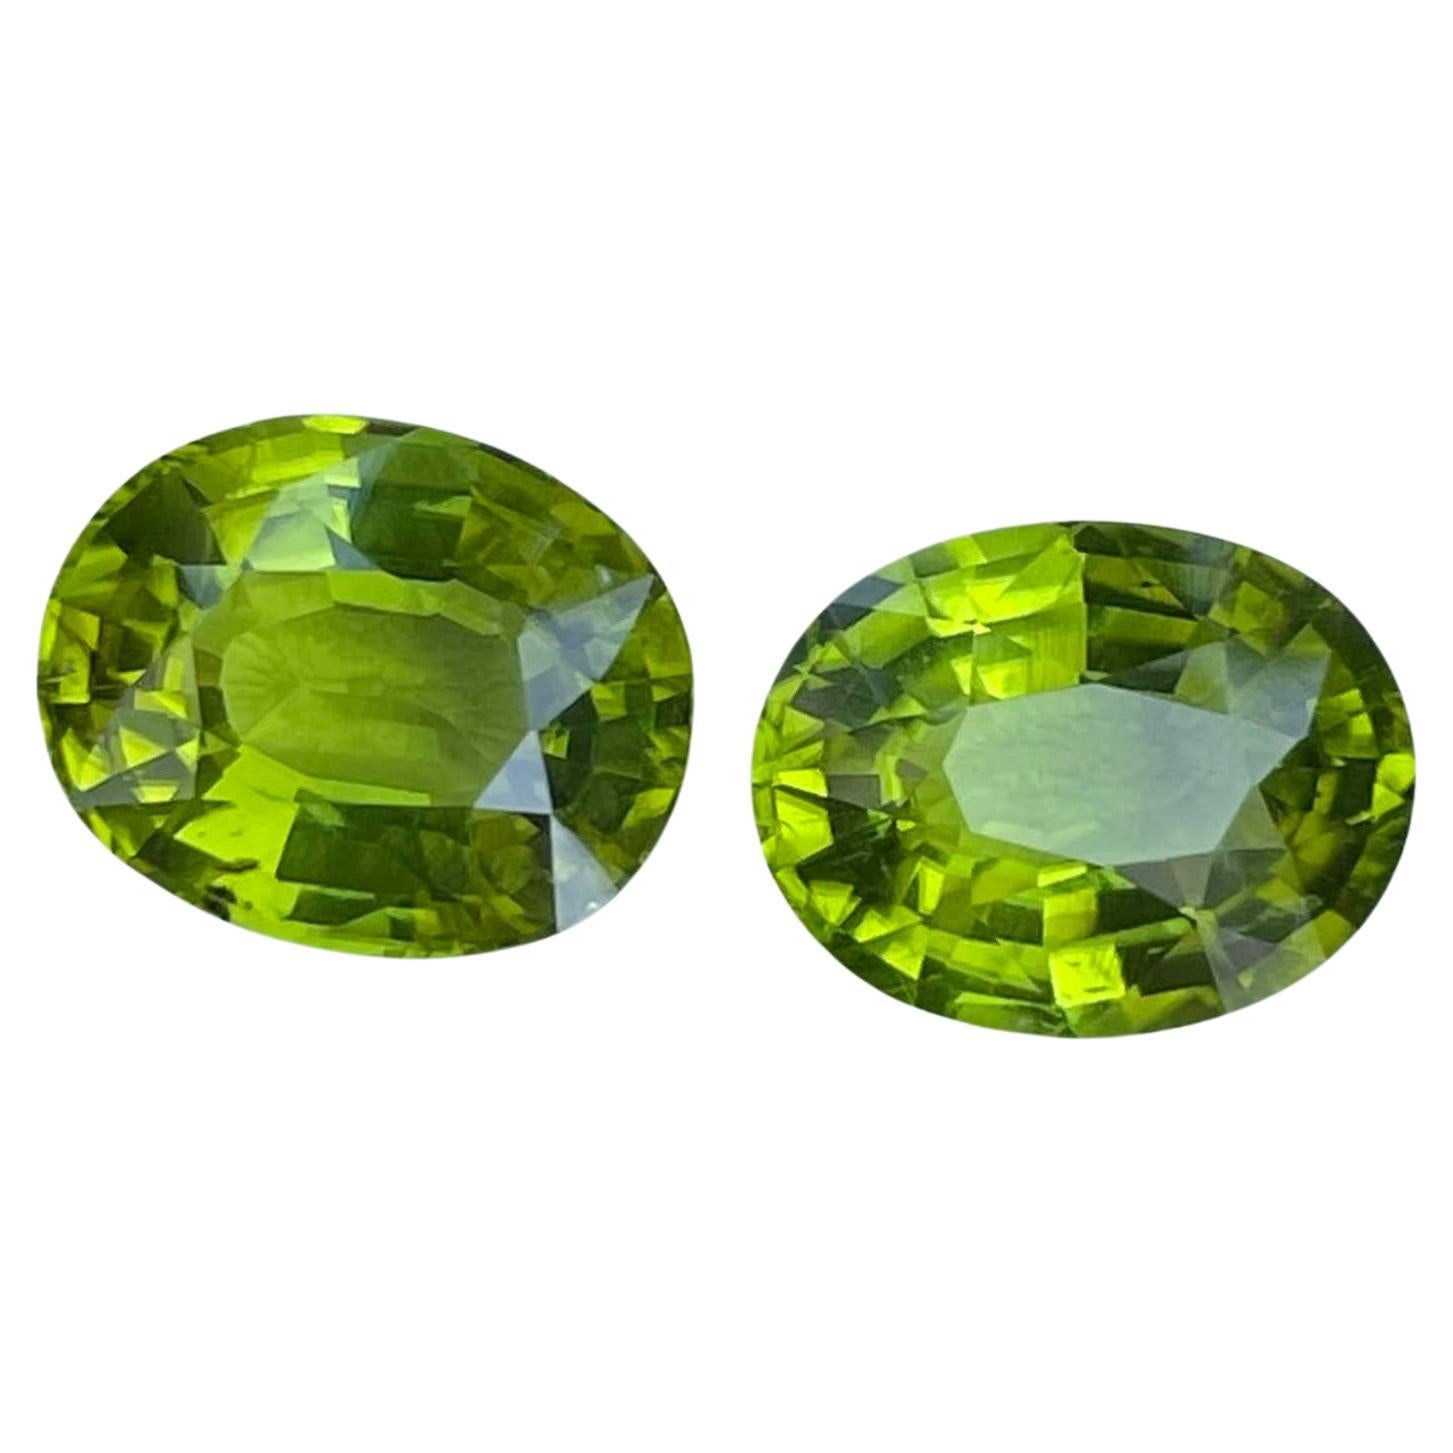 8.20 carats Green Loose Peridot Pair Fancy Oval Cut Natural Pakistani Gemstone